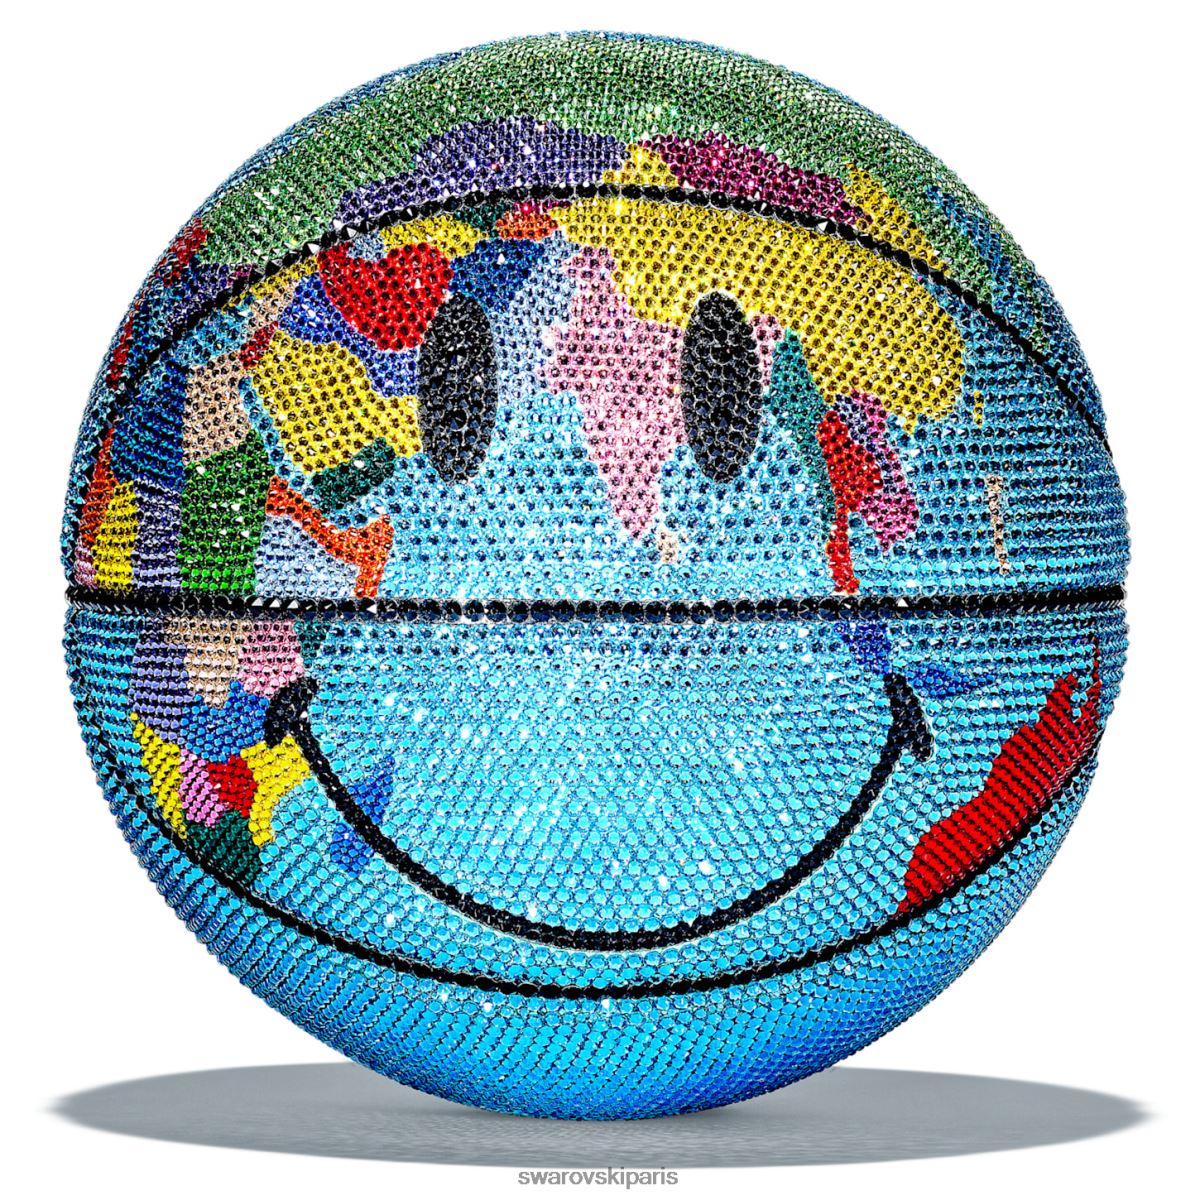 accessoires Swarovski marché, globe, basket-ball taille réglementaire, multicolore RZD0XJ1519